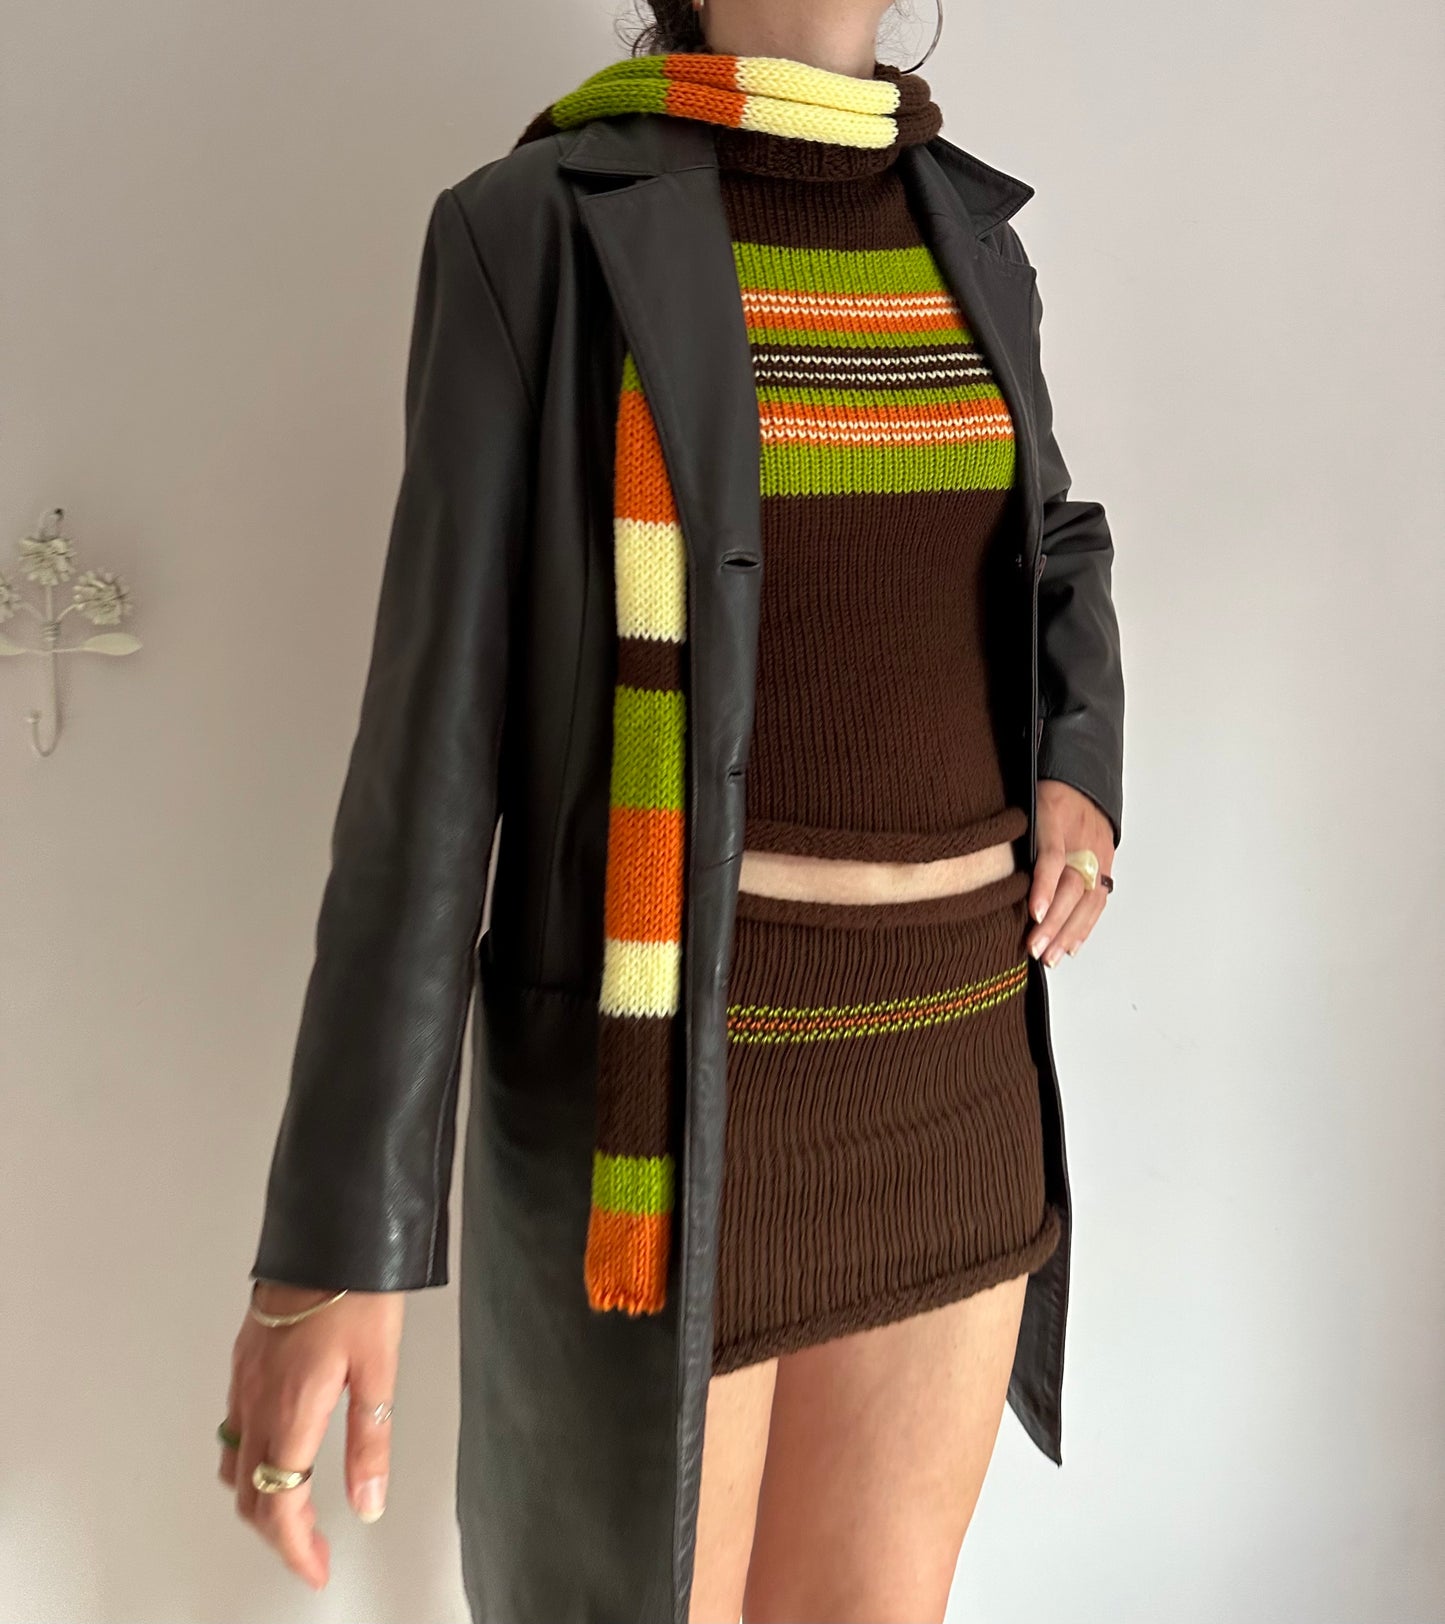 The Linea Set - matching turtleneck knit vest and mini skirt